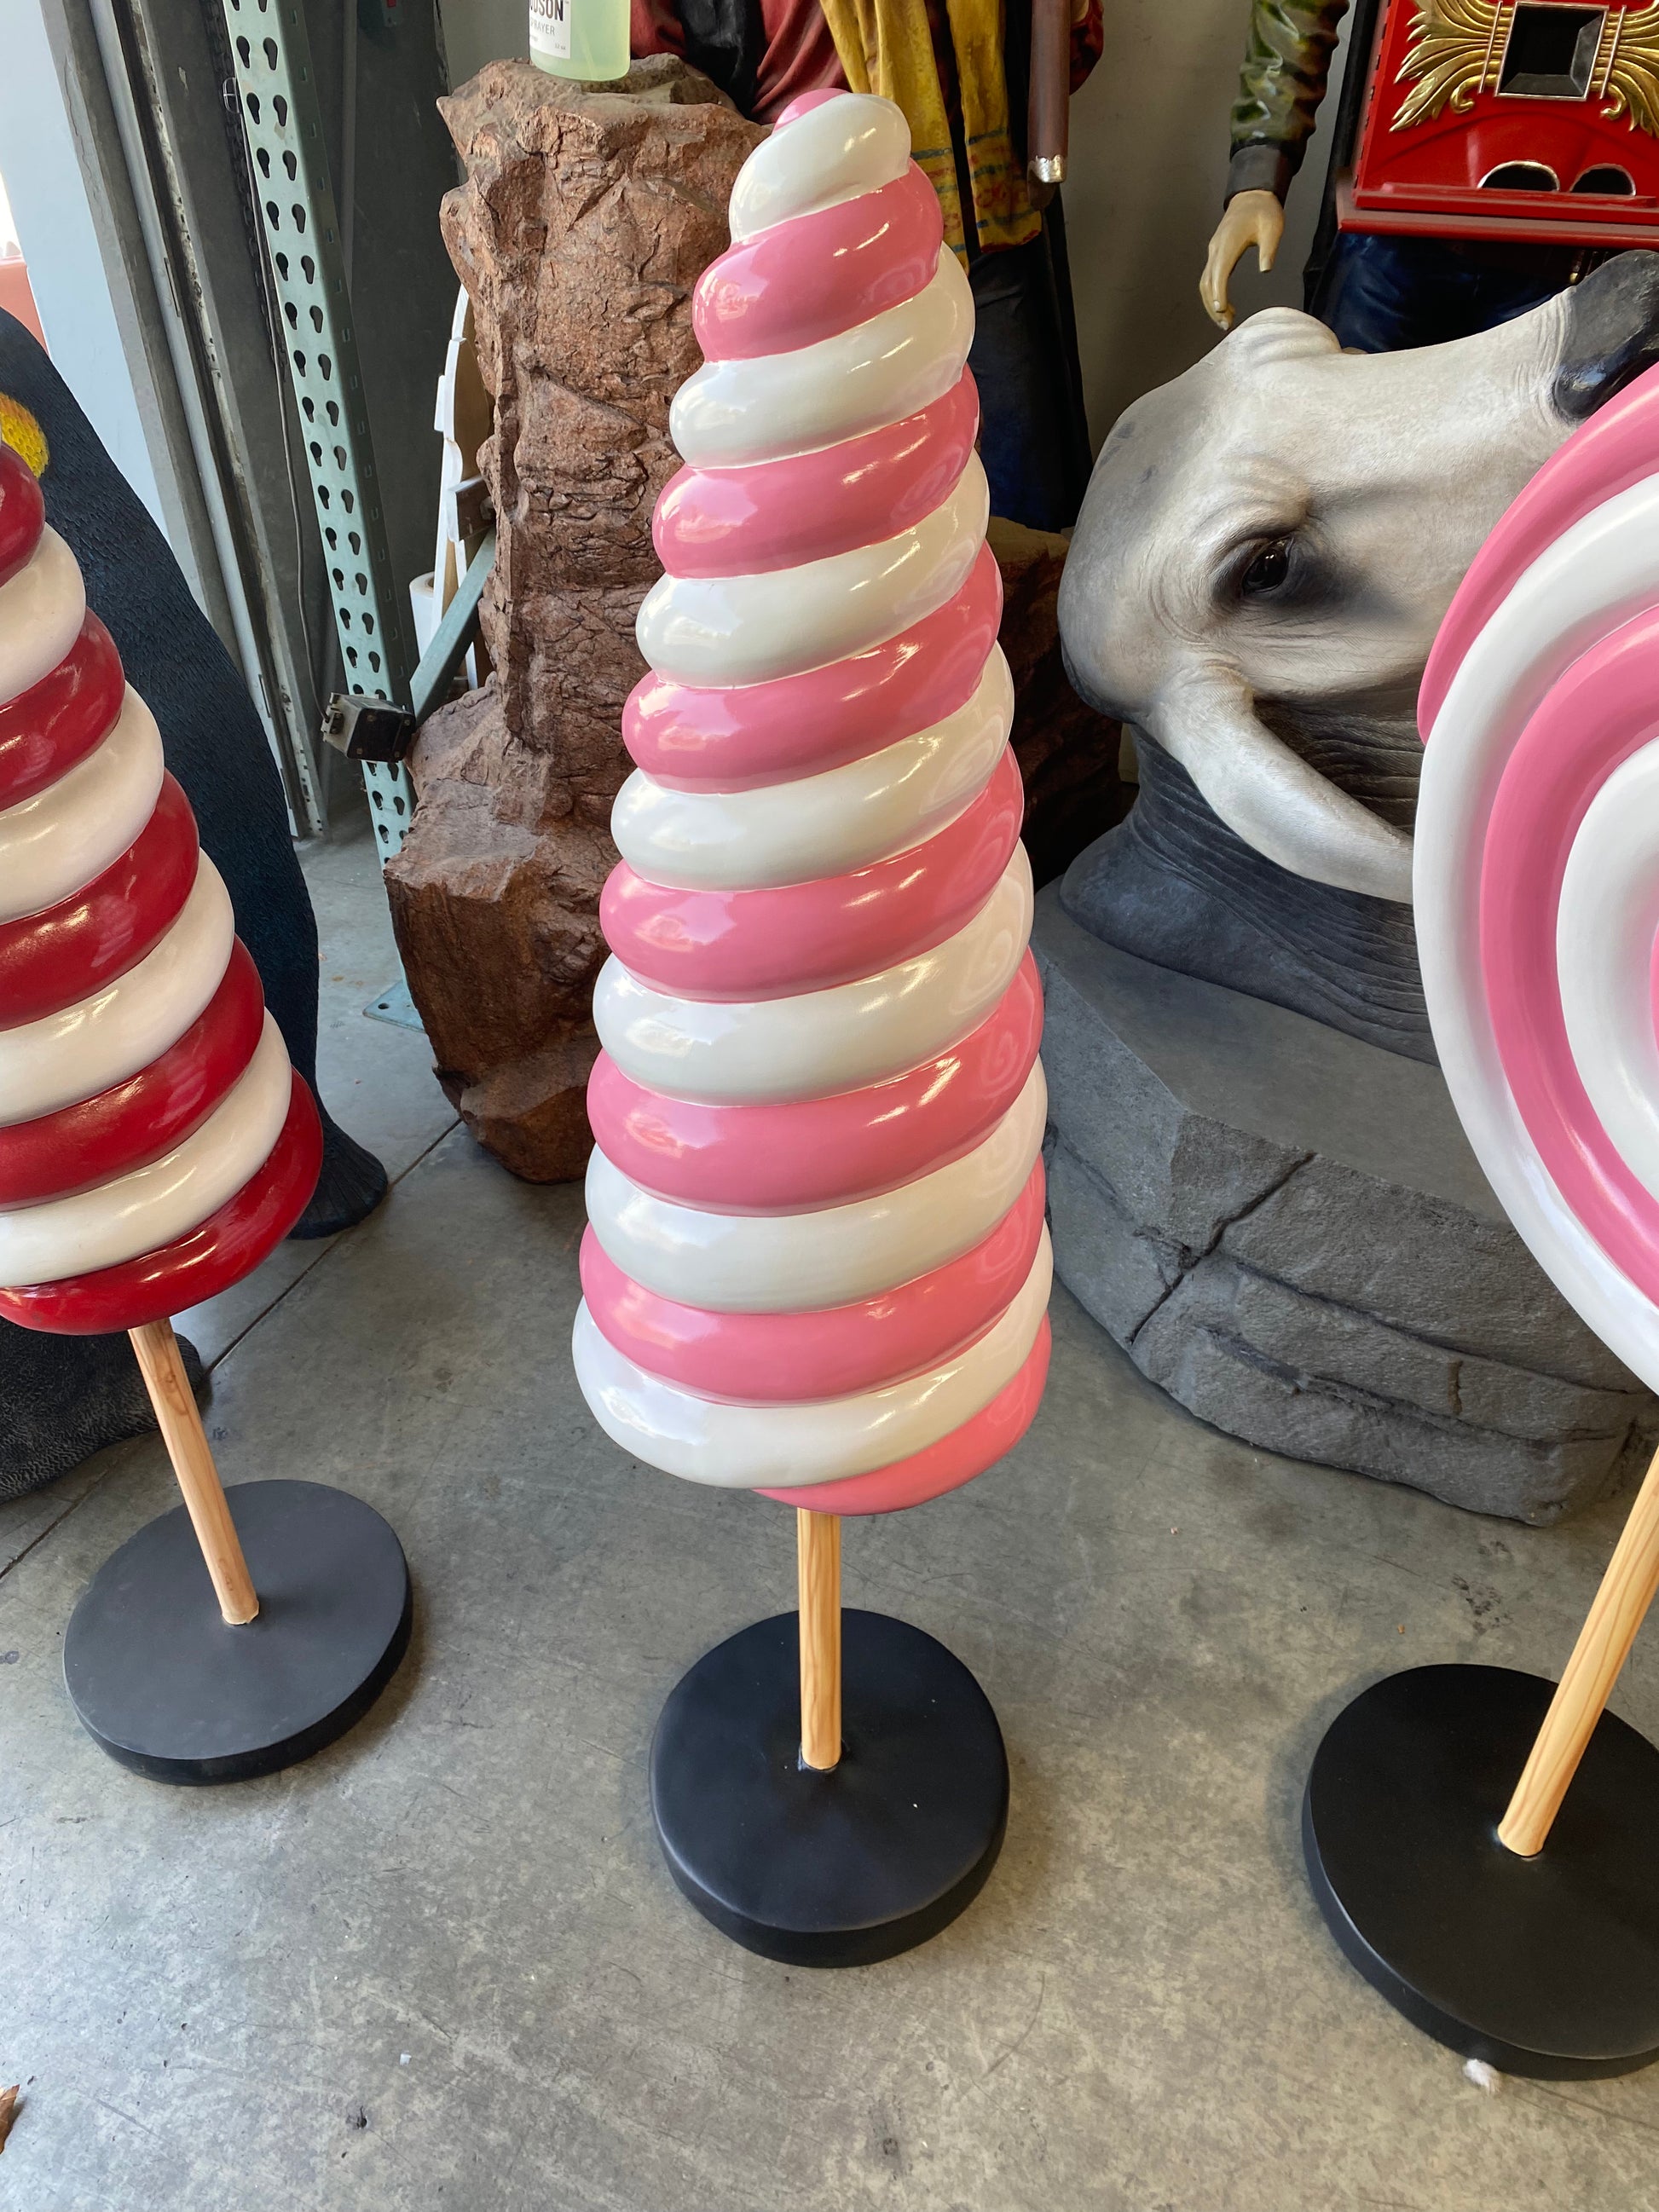 Small Pink Cone Lollipop Statue - LM Treasures Prop Rentals 